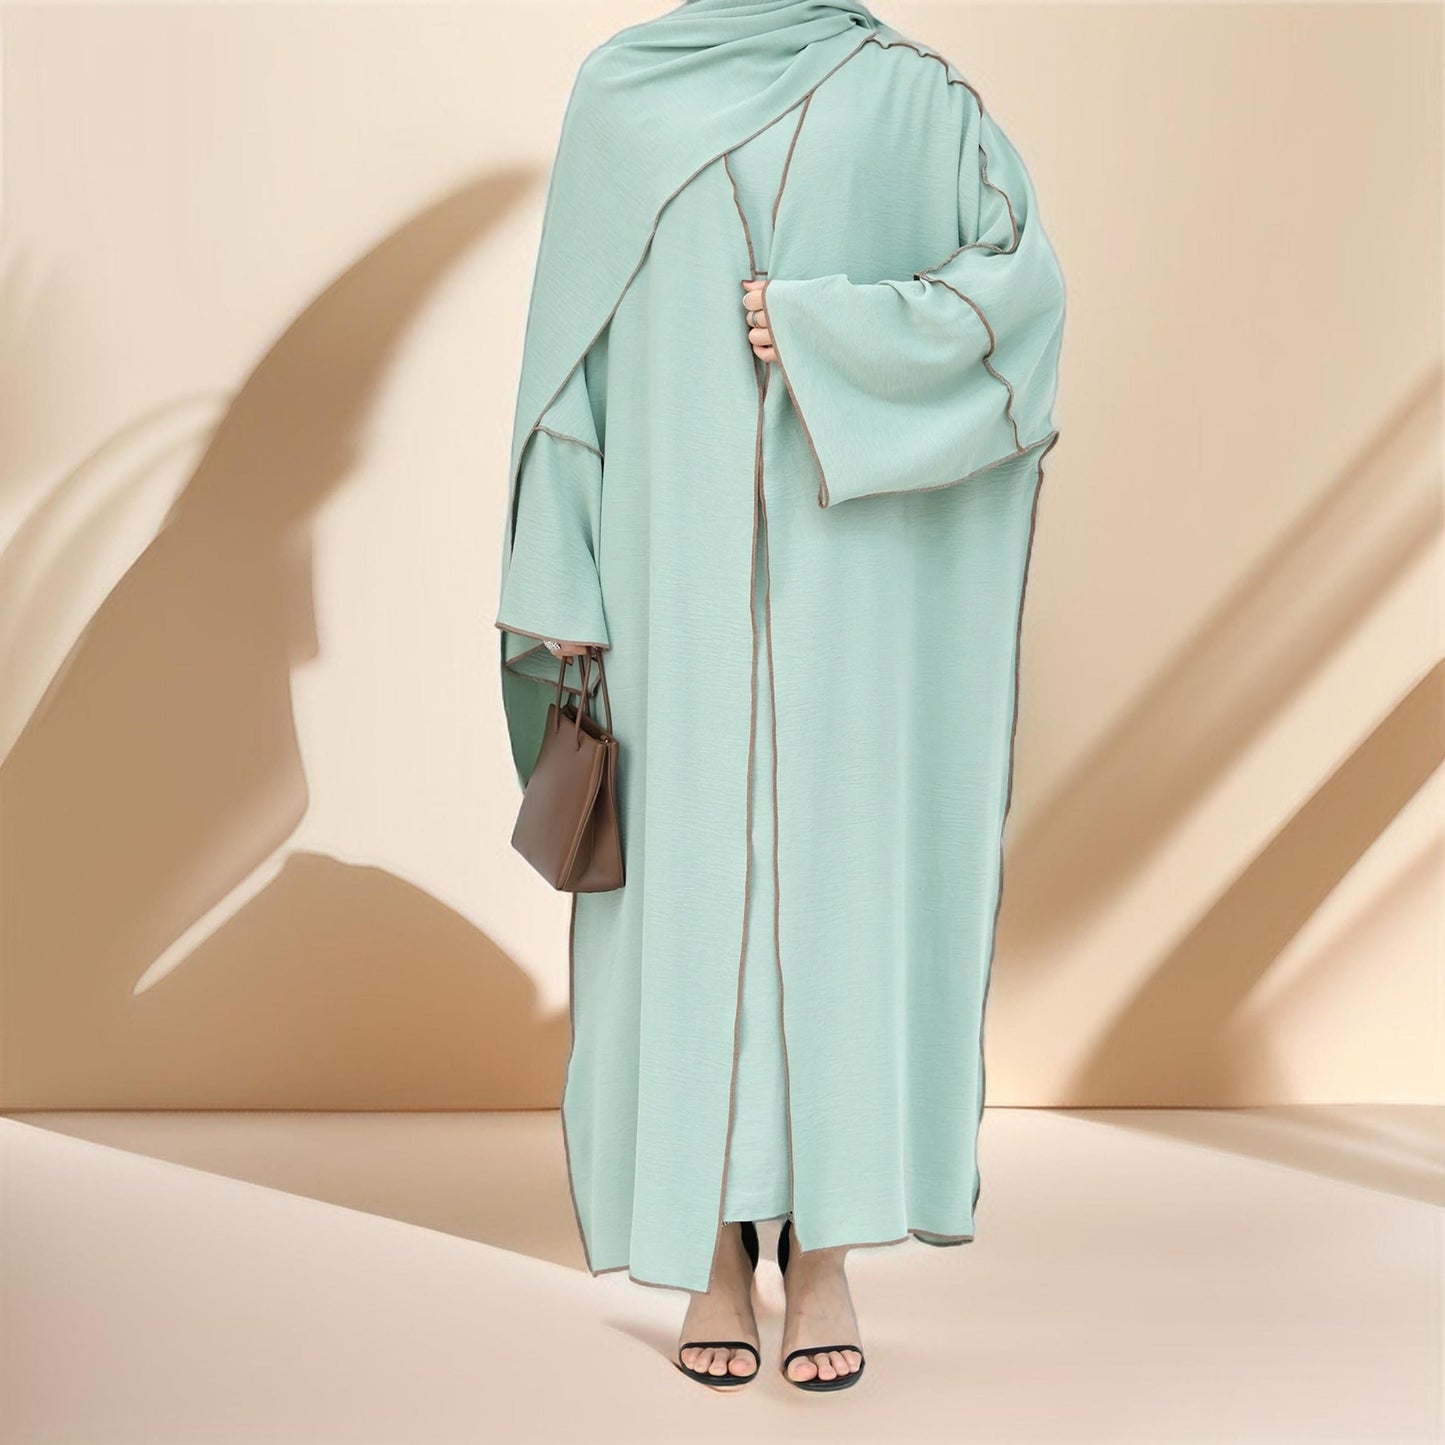 Raha four piece abaya set - Try Modest Limited 